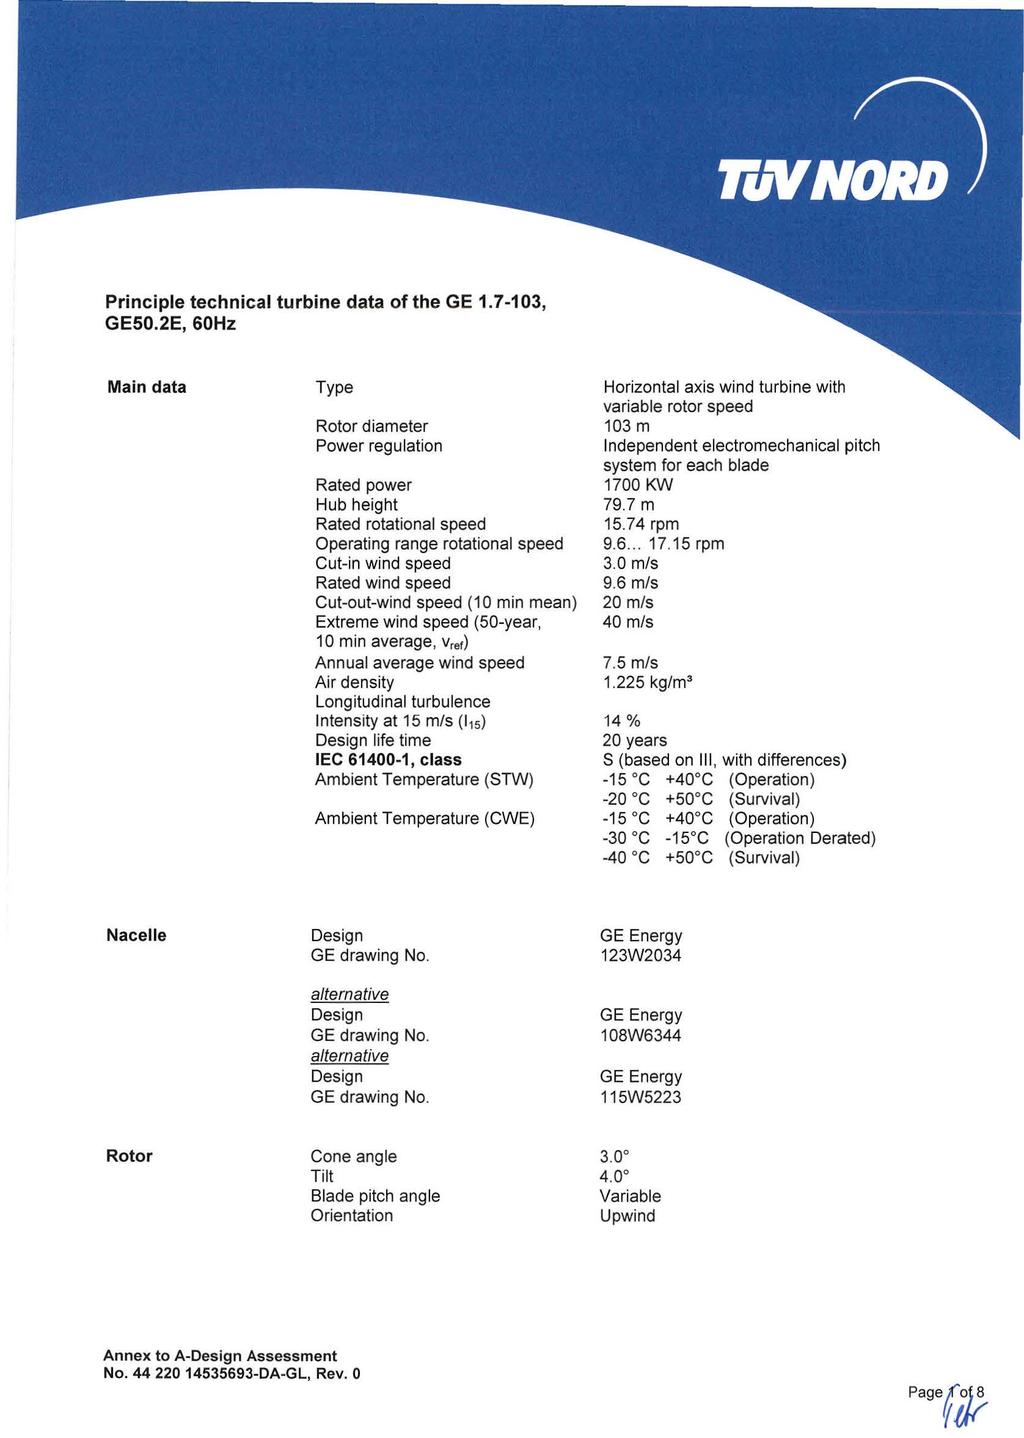 Principle technical turbine data of the GE 1.7-103, GE50.